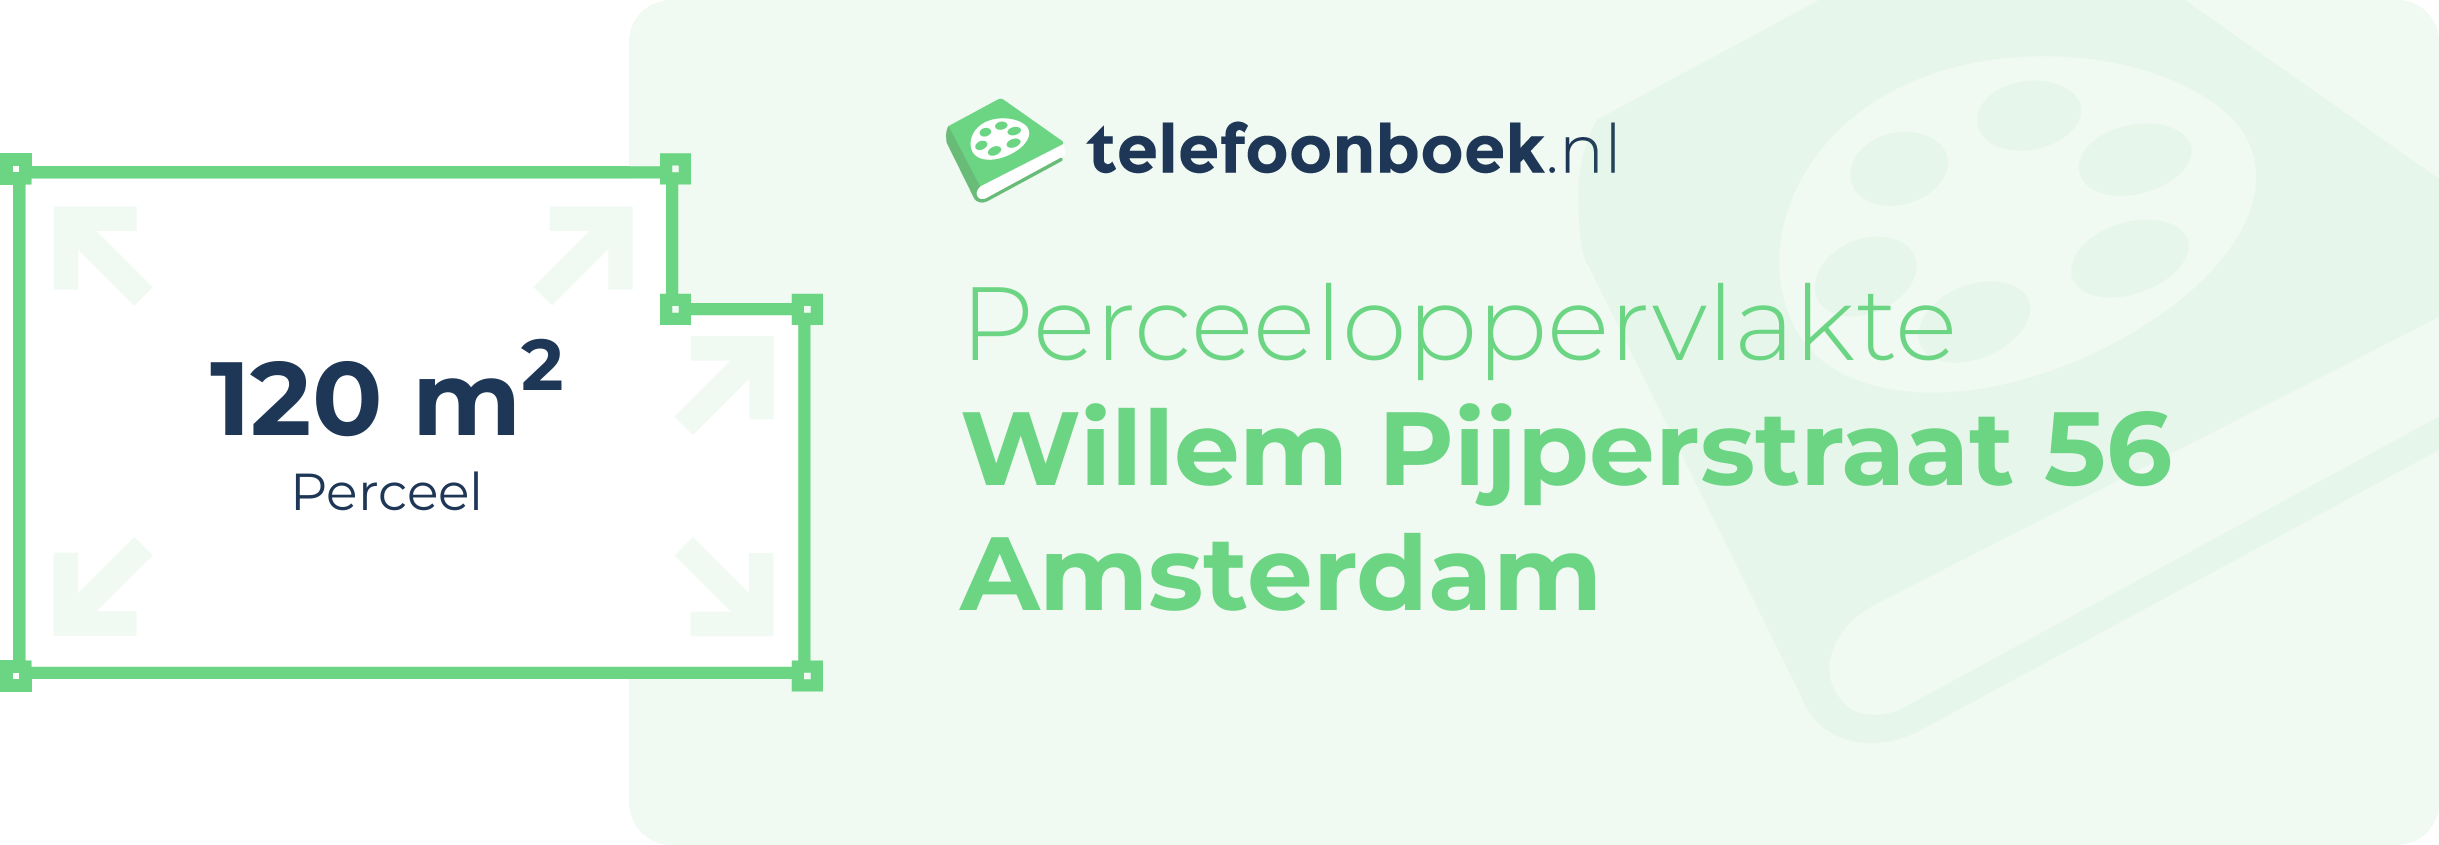 Perceeloppervlakte Willem Pijperstraat 56 Amsterdam